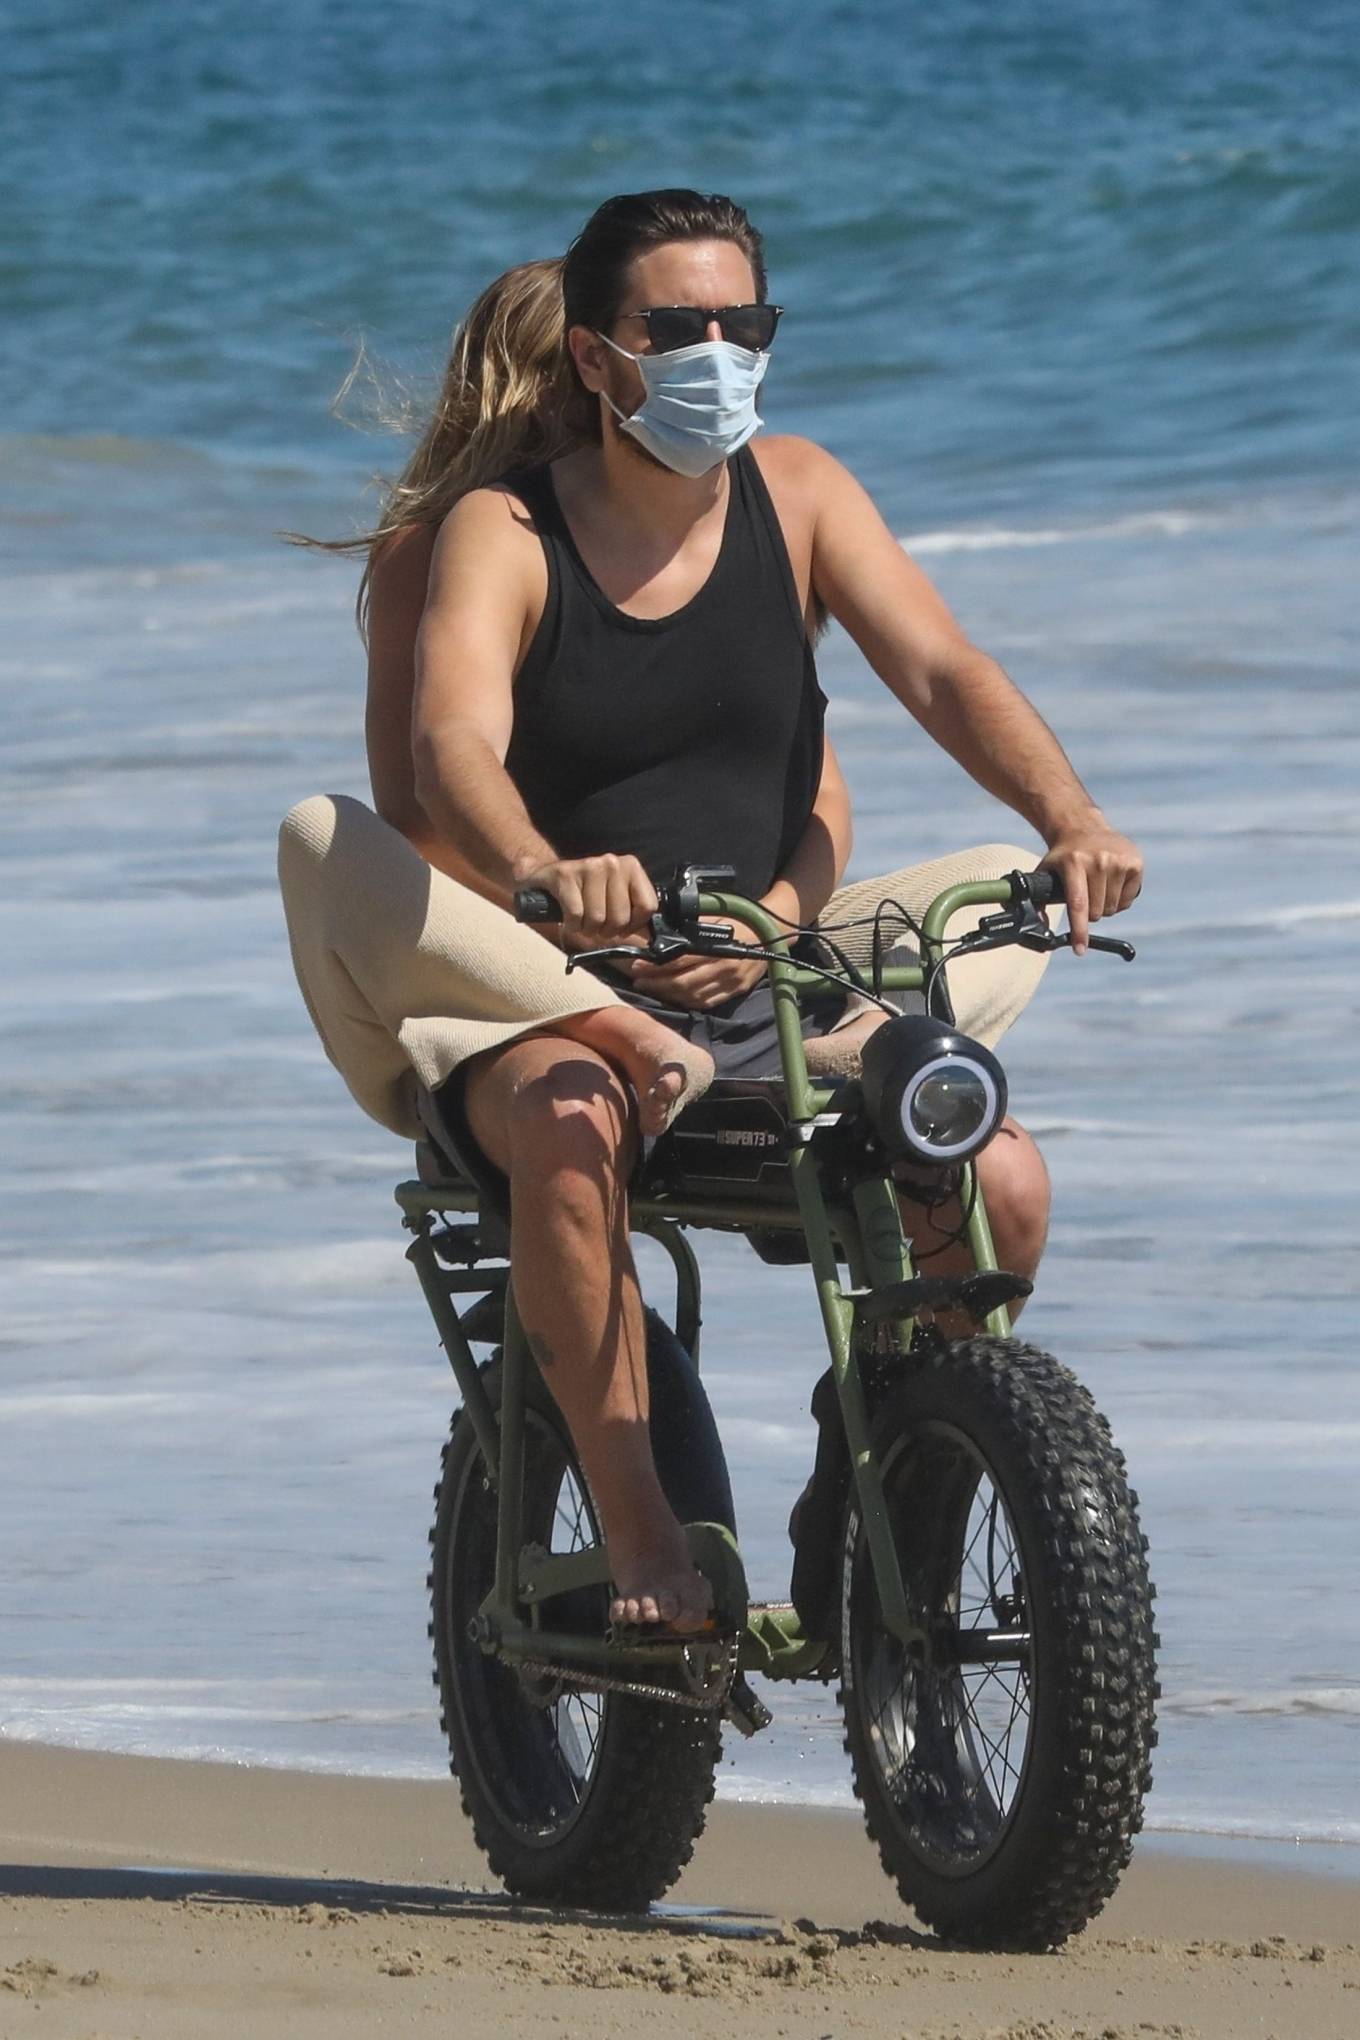 Sofia Richie and Scott Disick have some fun riding a motorbike in Malibu